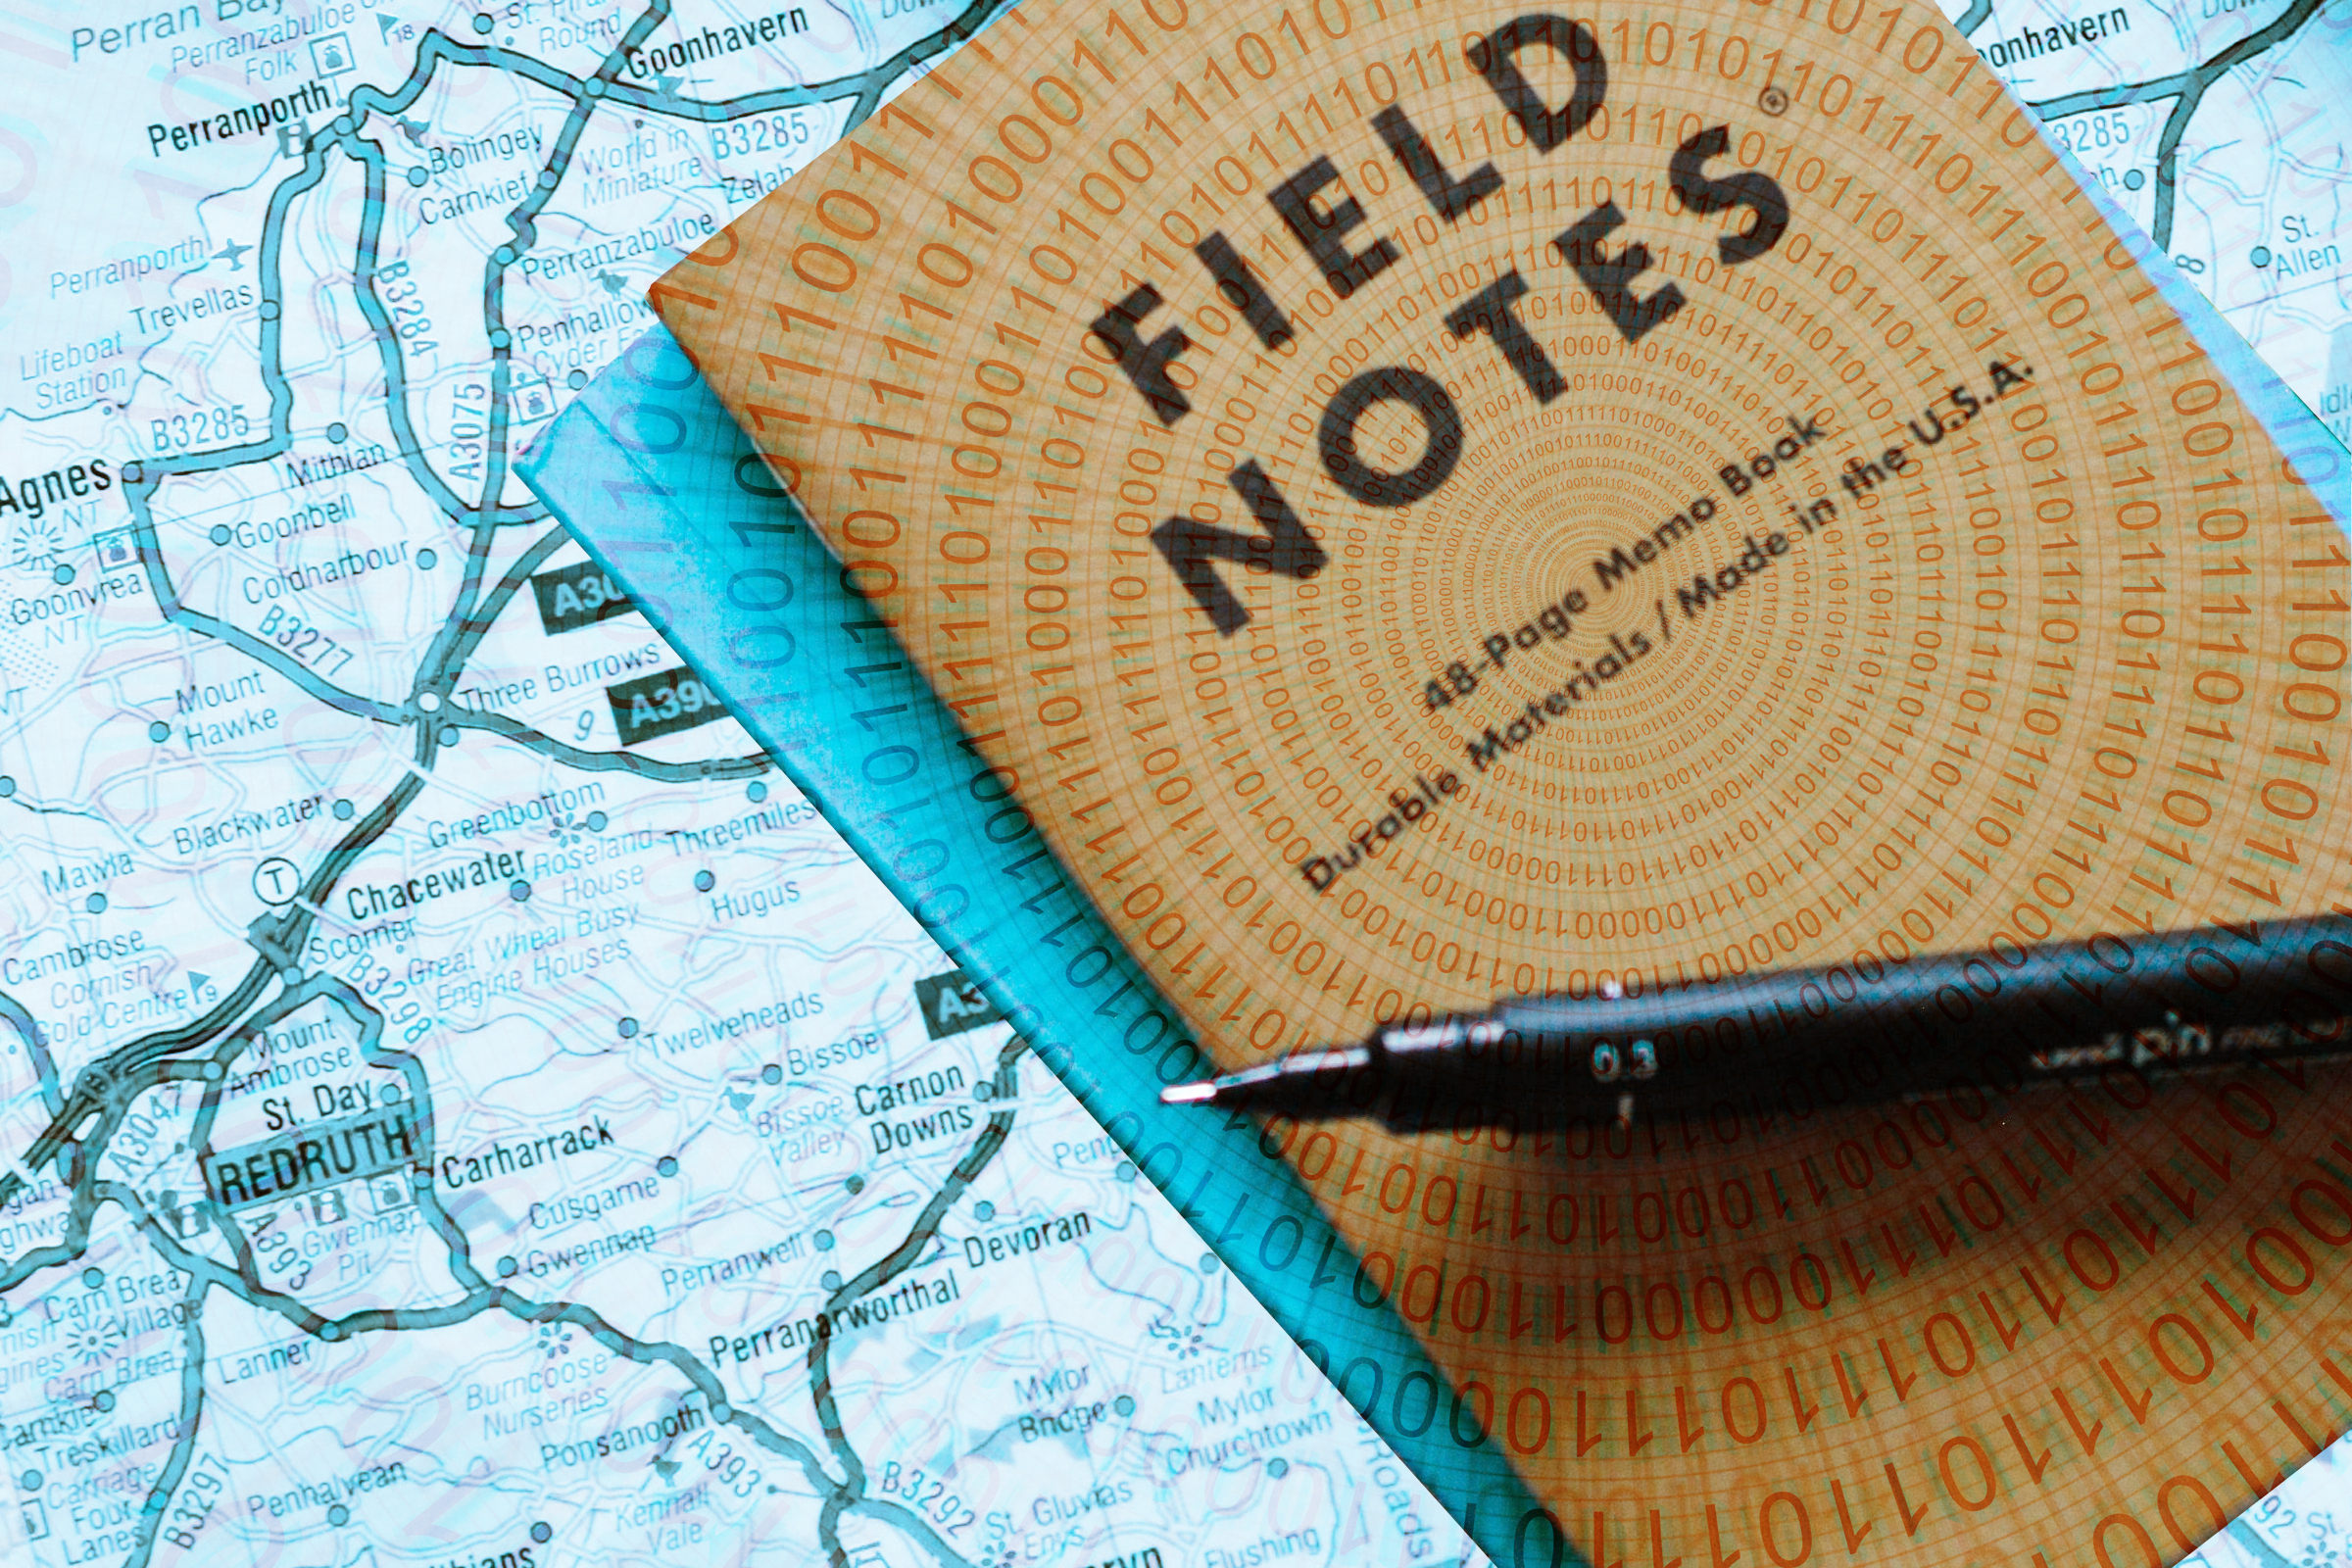 field-note_play-book_playbook_map_navigation_journey_by-hello-i-m-nik-via-unsplash-100813507-orig